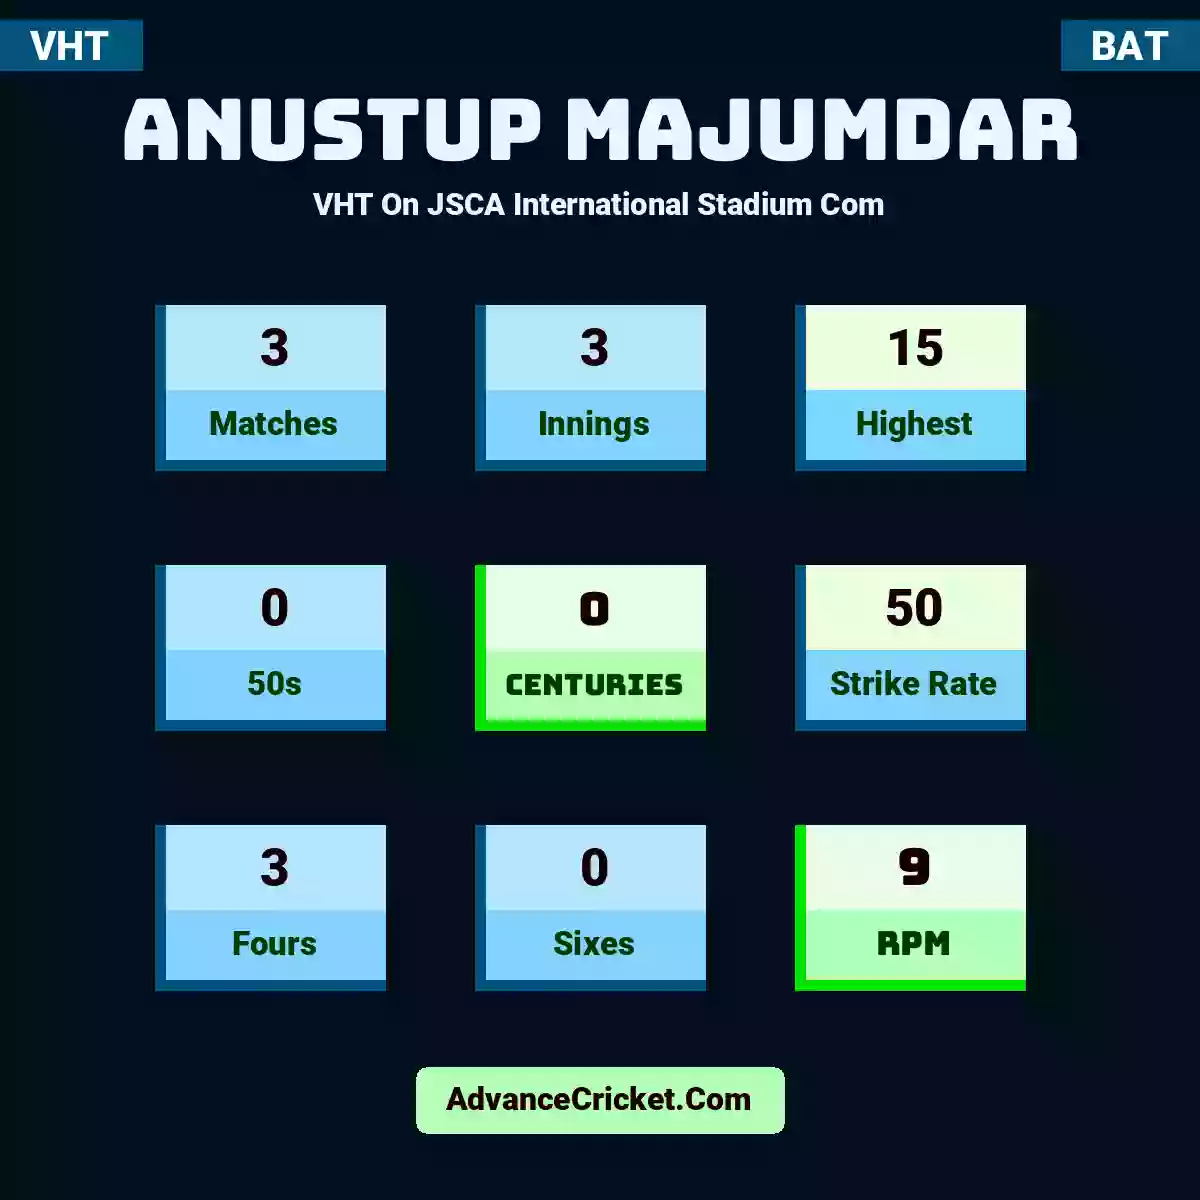 Anustup Majumdar VHT  On JSCA International Stadium Com, Anustup Majumdar played 3 matches, scored 15 runs as highest, 0 half-centuries, and 0 centuries, with a strike rate of 50. A.Majumdar hit 3 fours and 0 sixes, with an RPM of 9.